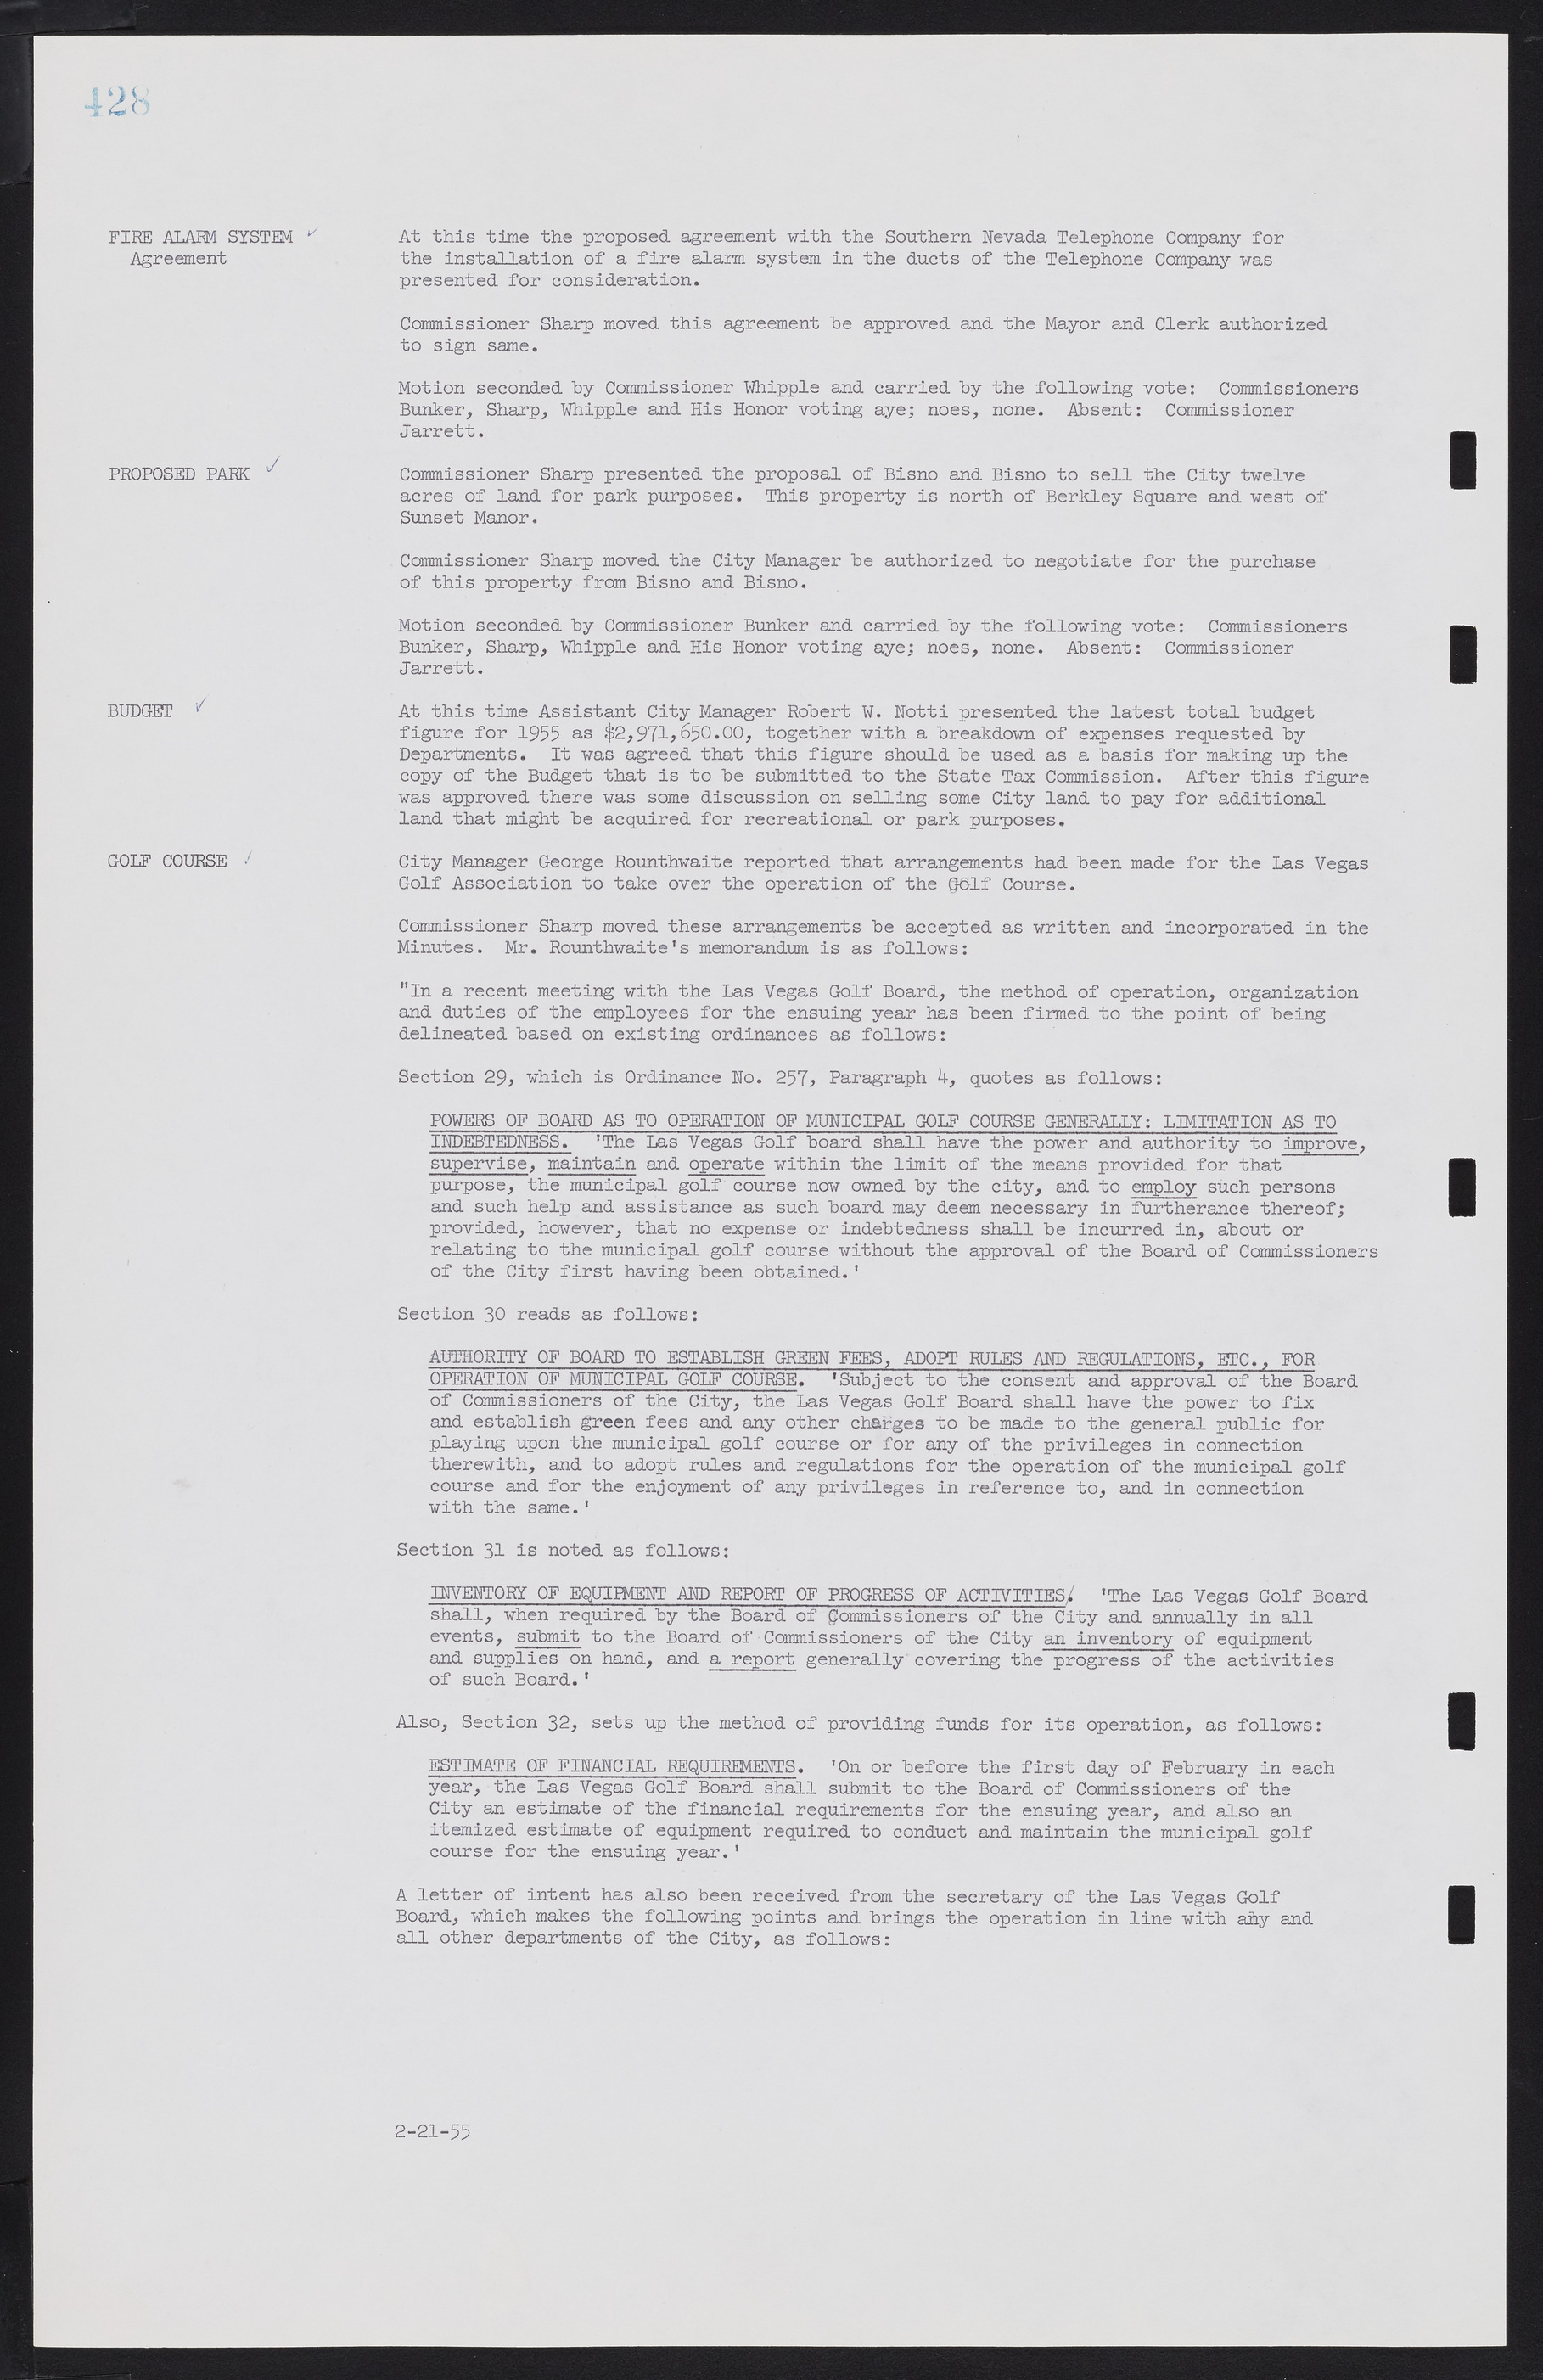 Las Vegas City Commission Minutes, February 17, 1954 to September 21, 1955, lvc000009-434